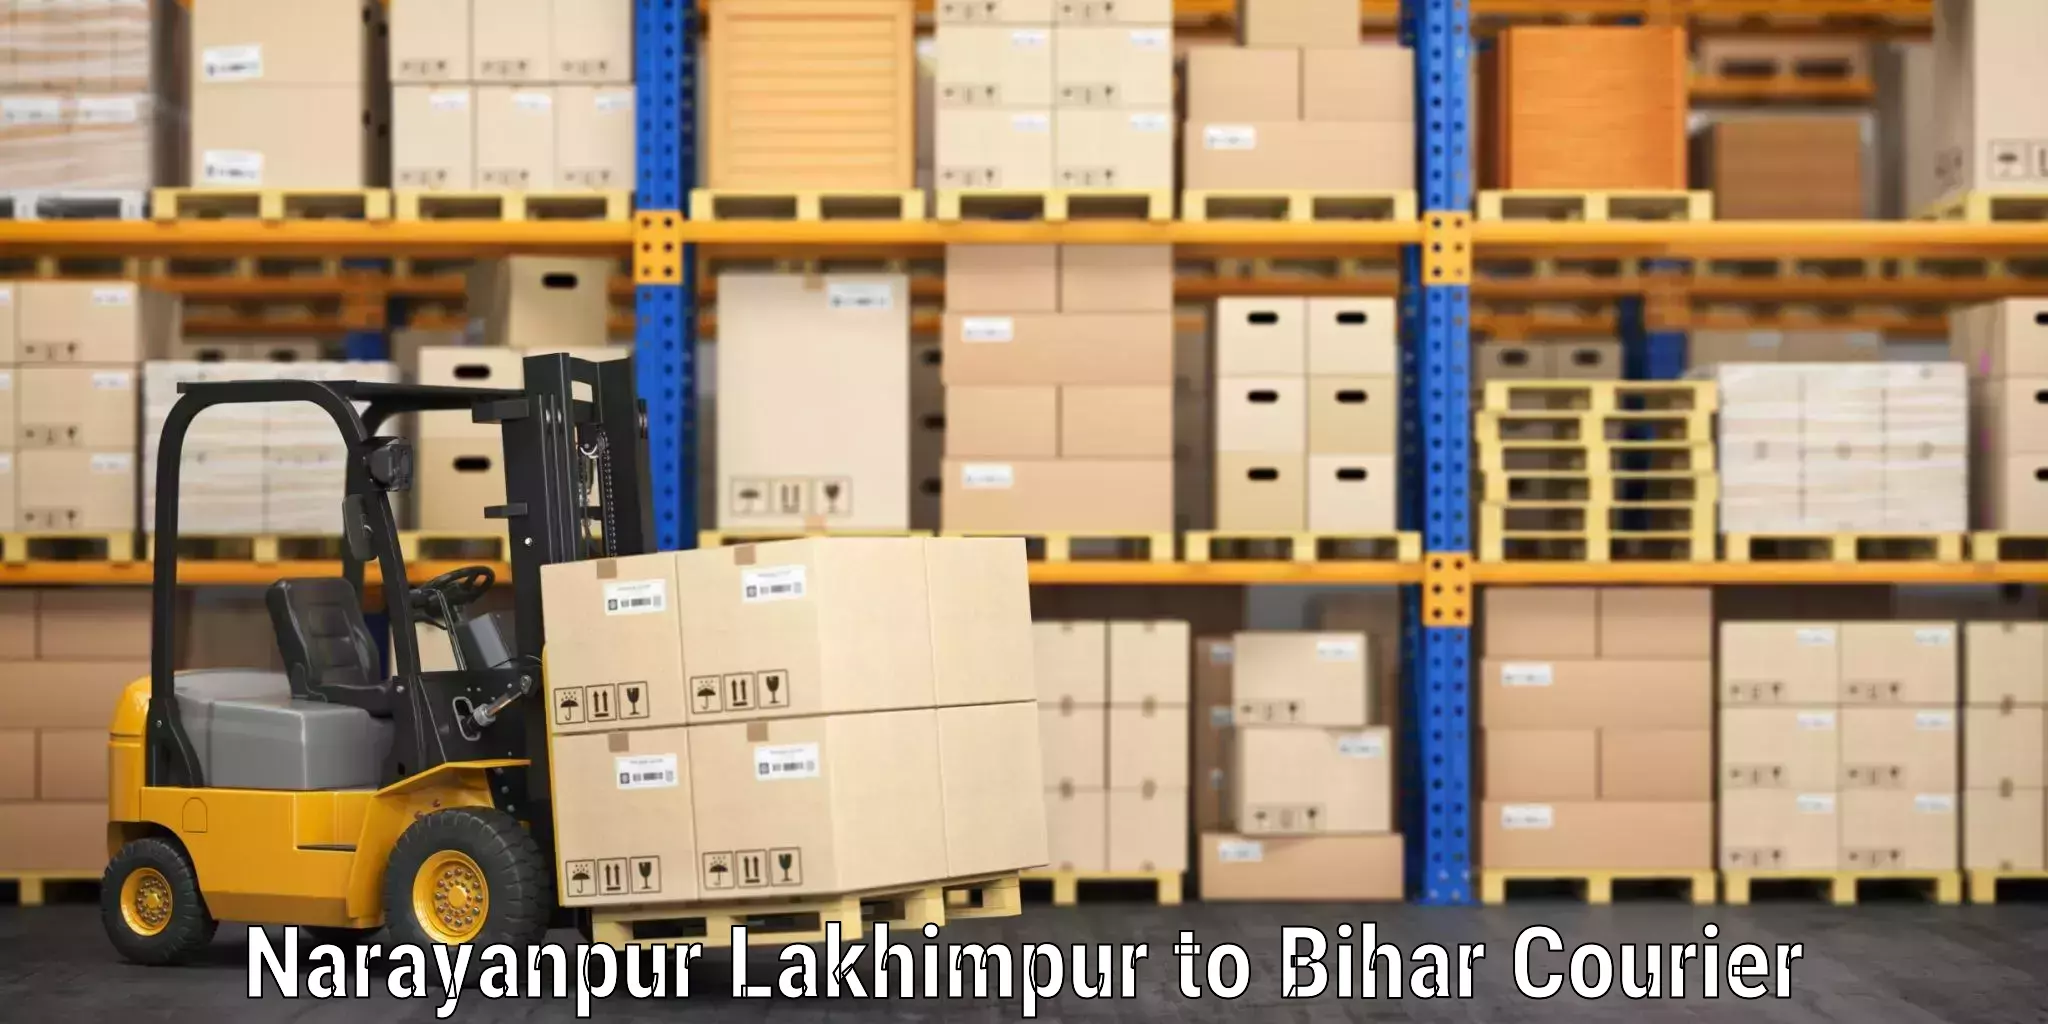 Luggage storage and delivery Narayanpur Lakhimpur to Hazrat Jandaha